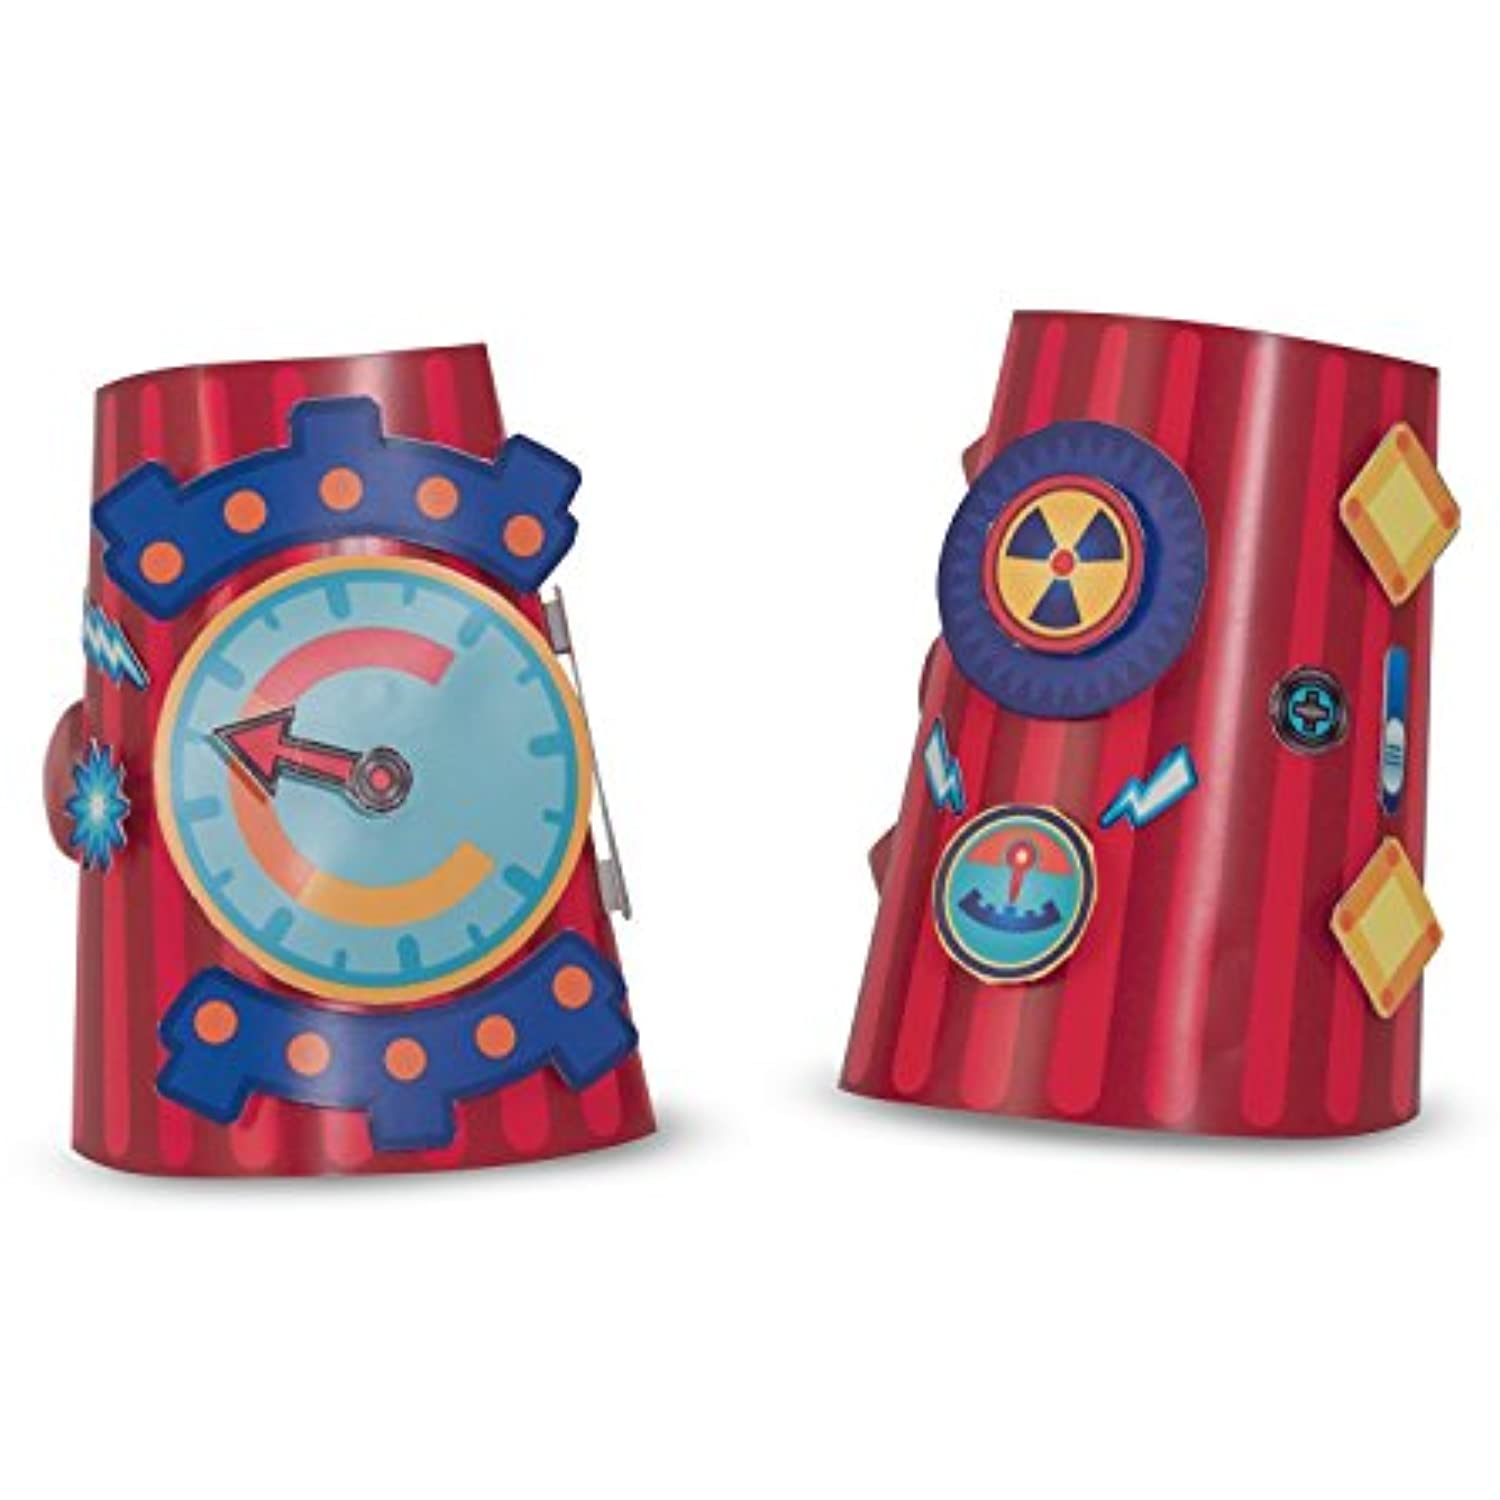 Melissa & Doug Superhero Masks and Cuffs - Simply Crafty Series & 1 Scratch Art Mini-Pad Bundle (09477)